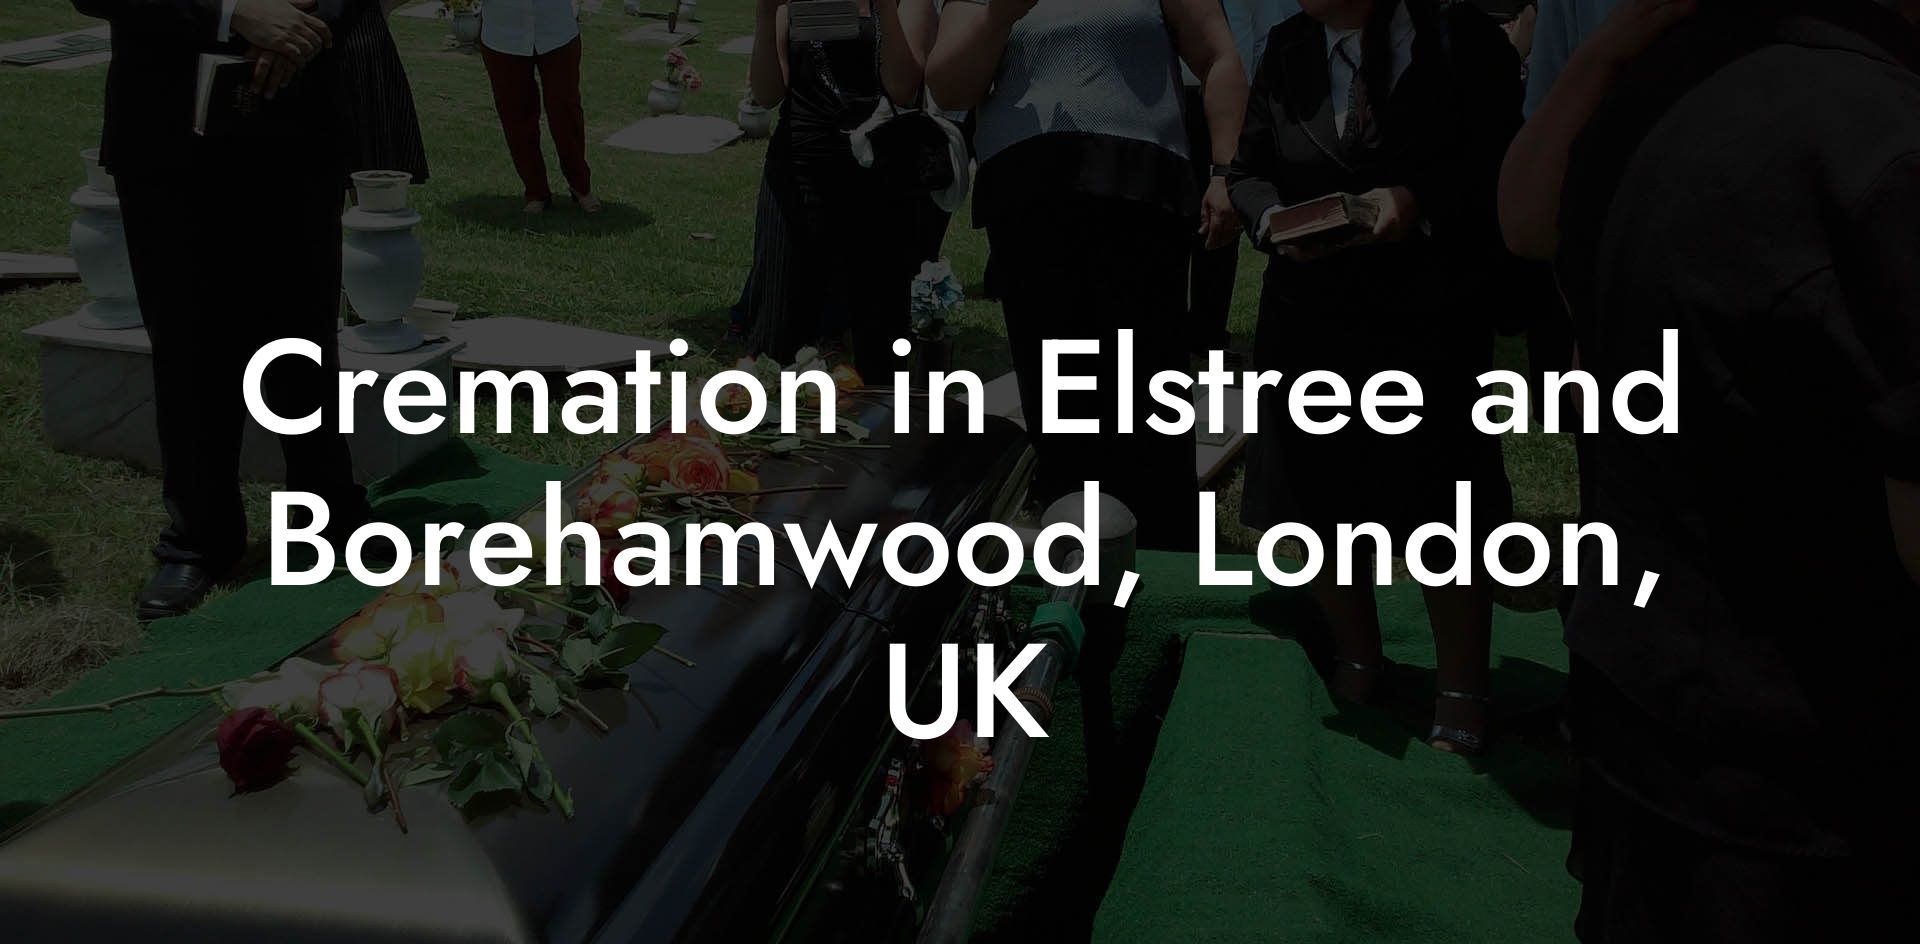 Cremation in Elstree and Borehamwood, London, UK